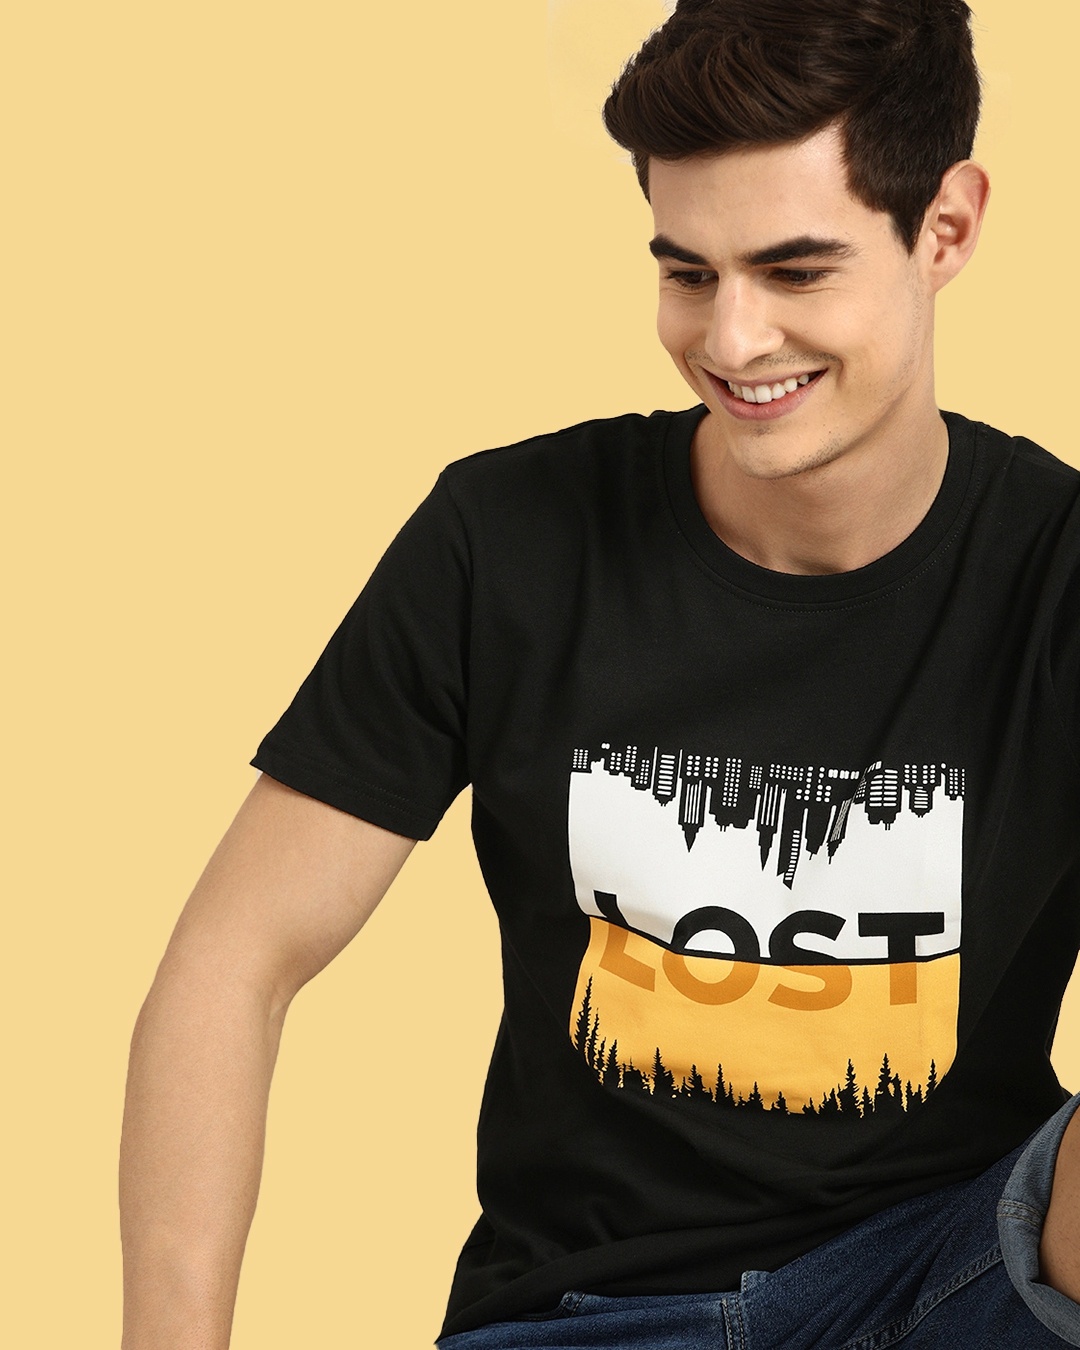 Buy Men's Black Lightning Bolt Printed T-shirt Online at Bewakoof